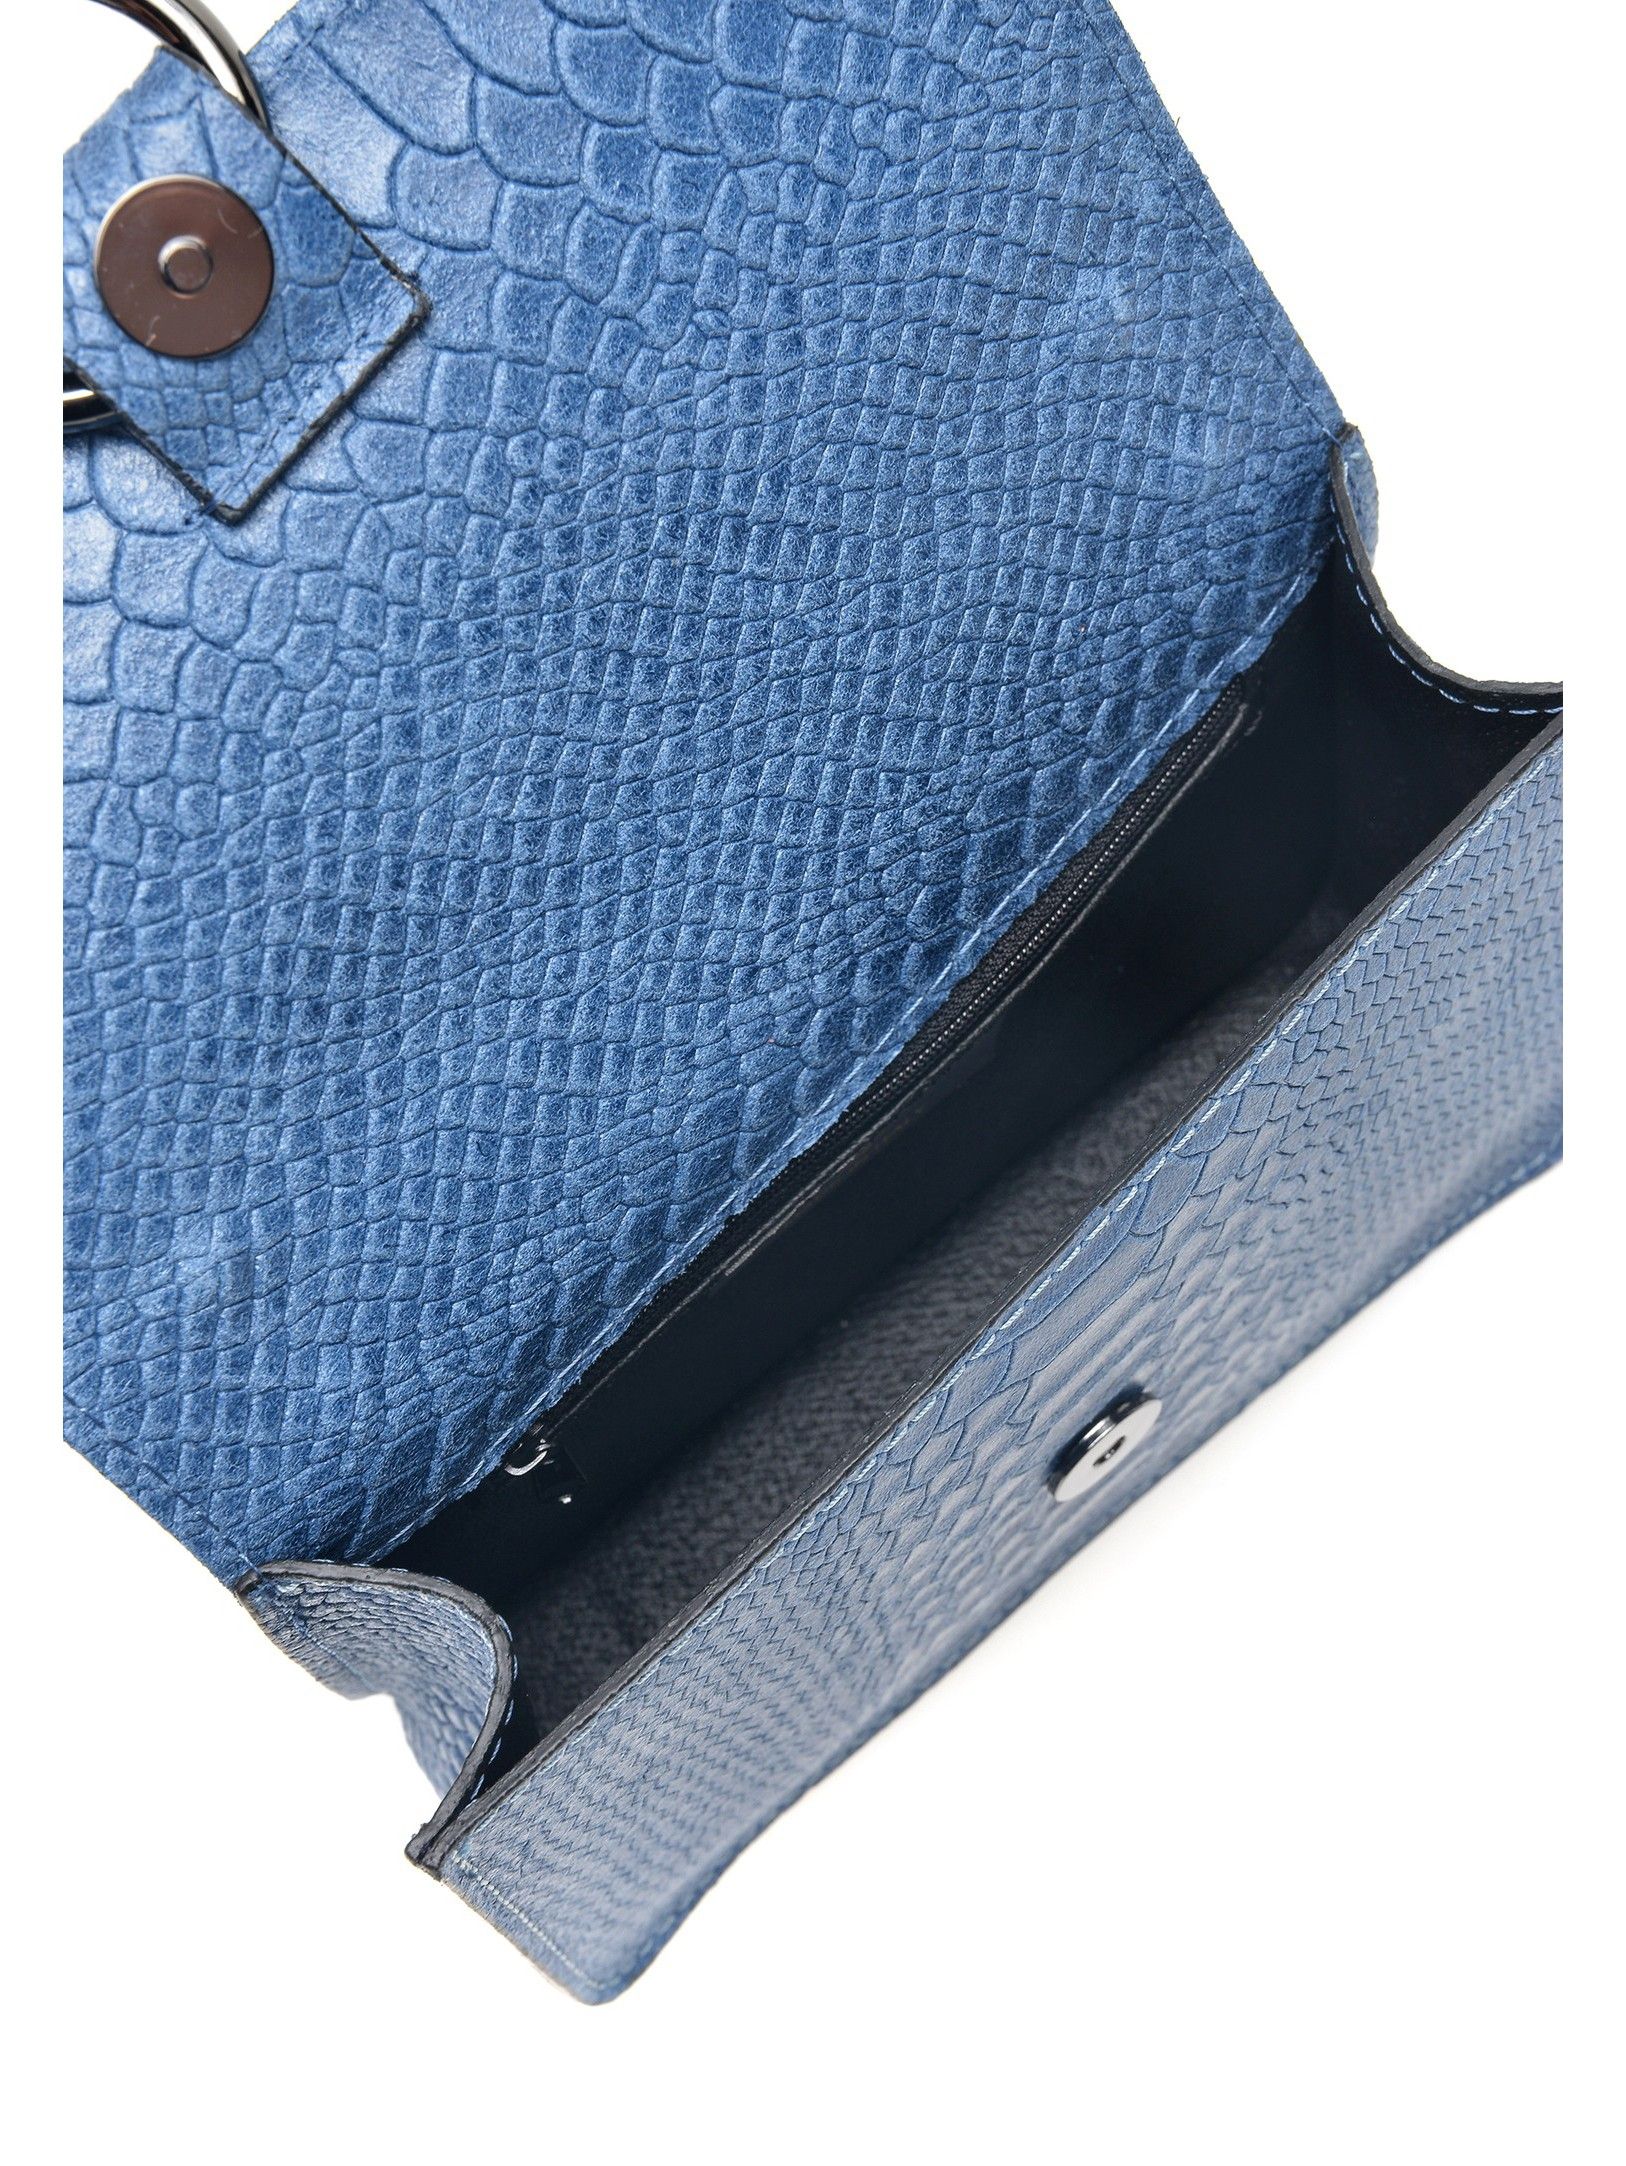 Shoulder Bag
100% cow leather
Chain shoulder strap
Magnetic clasp closure
Snake skin pattern
Interior zip pocket
Dimensions (L): 14x19.5x5 cm
Handle: /
Shoulder strap: 120 cm